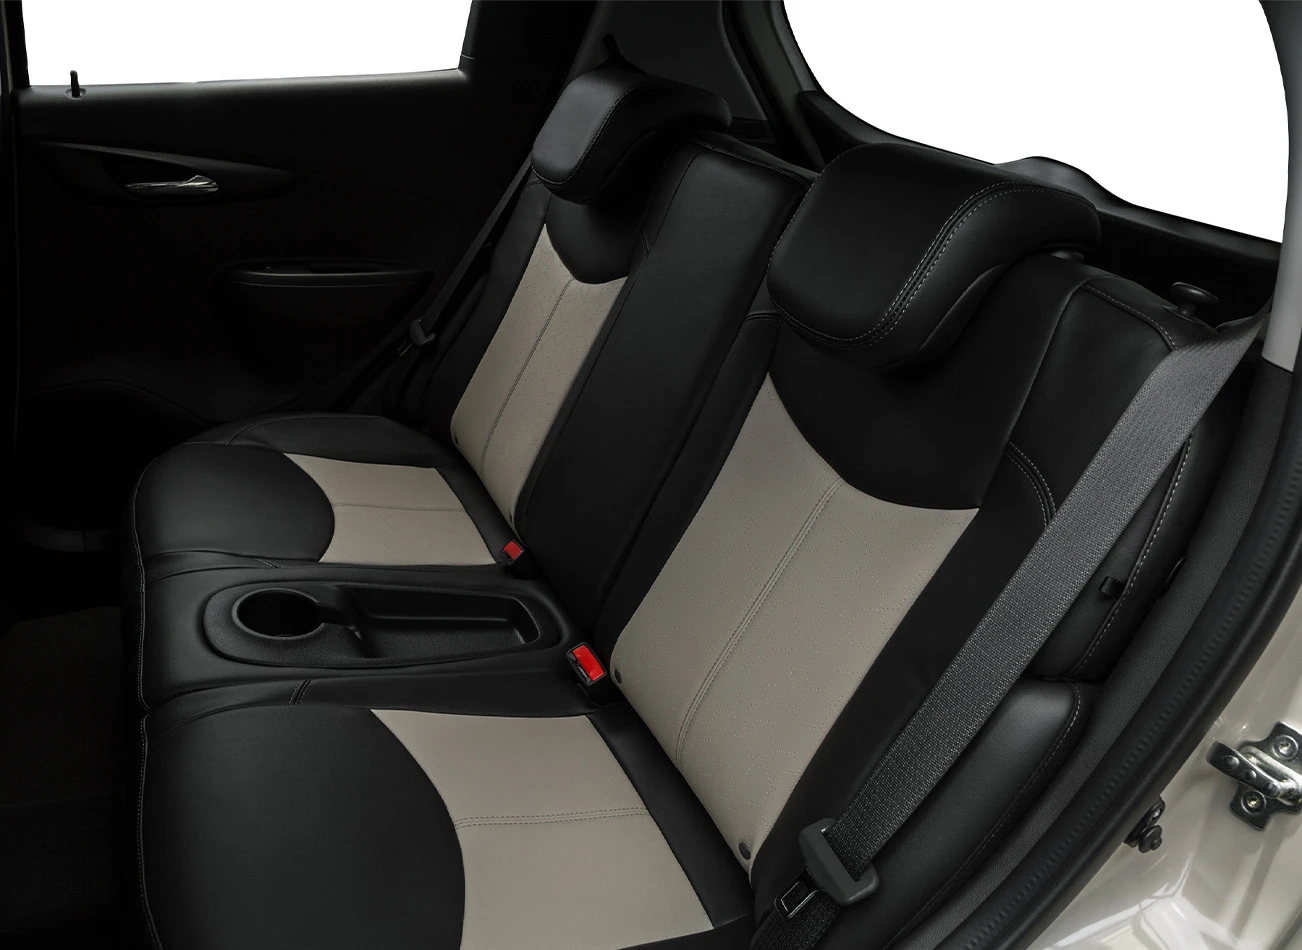 2018 Chevrolet Spark: Back seats | CarMax